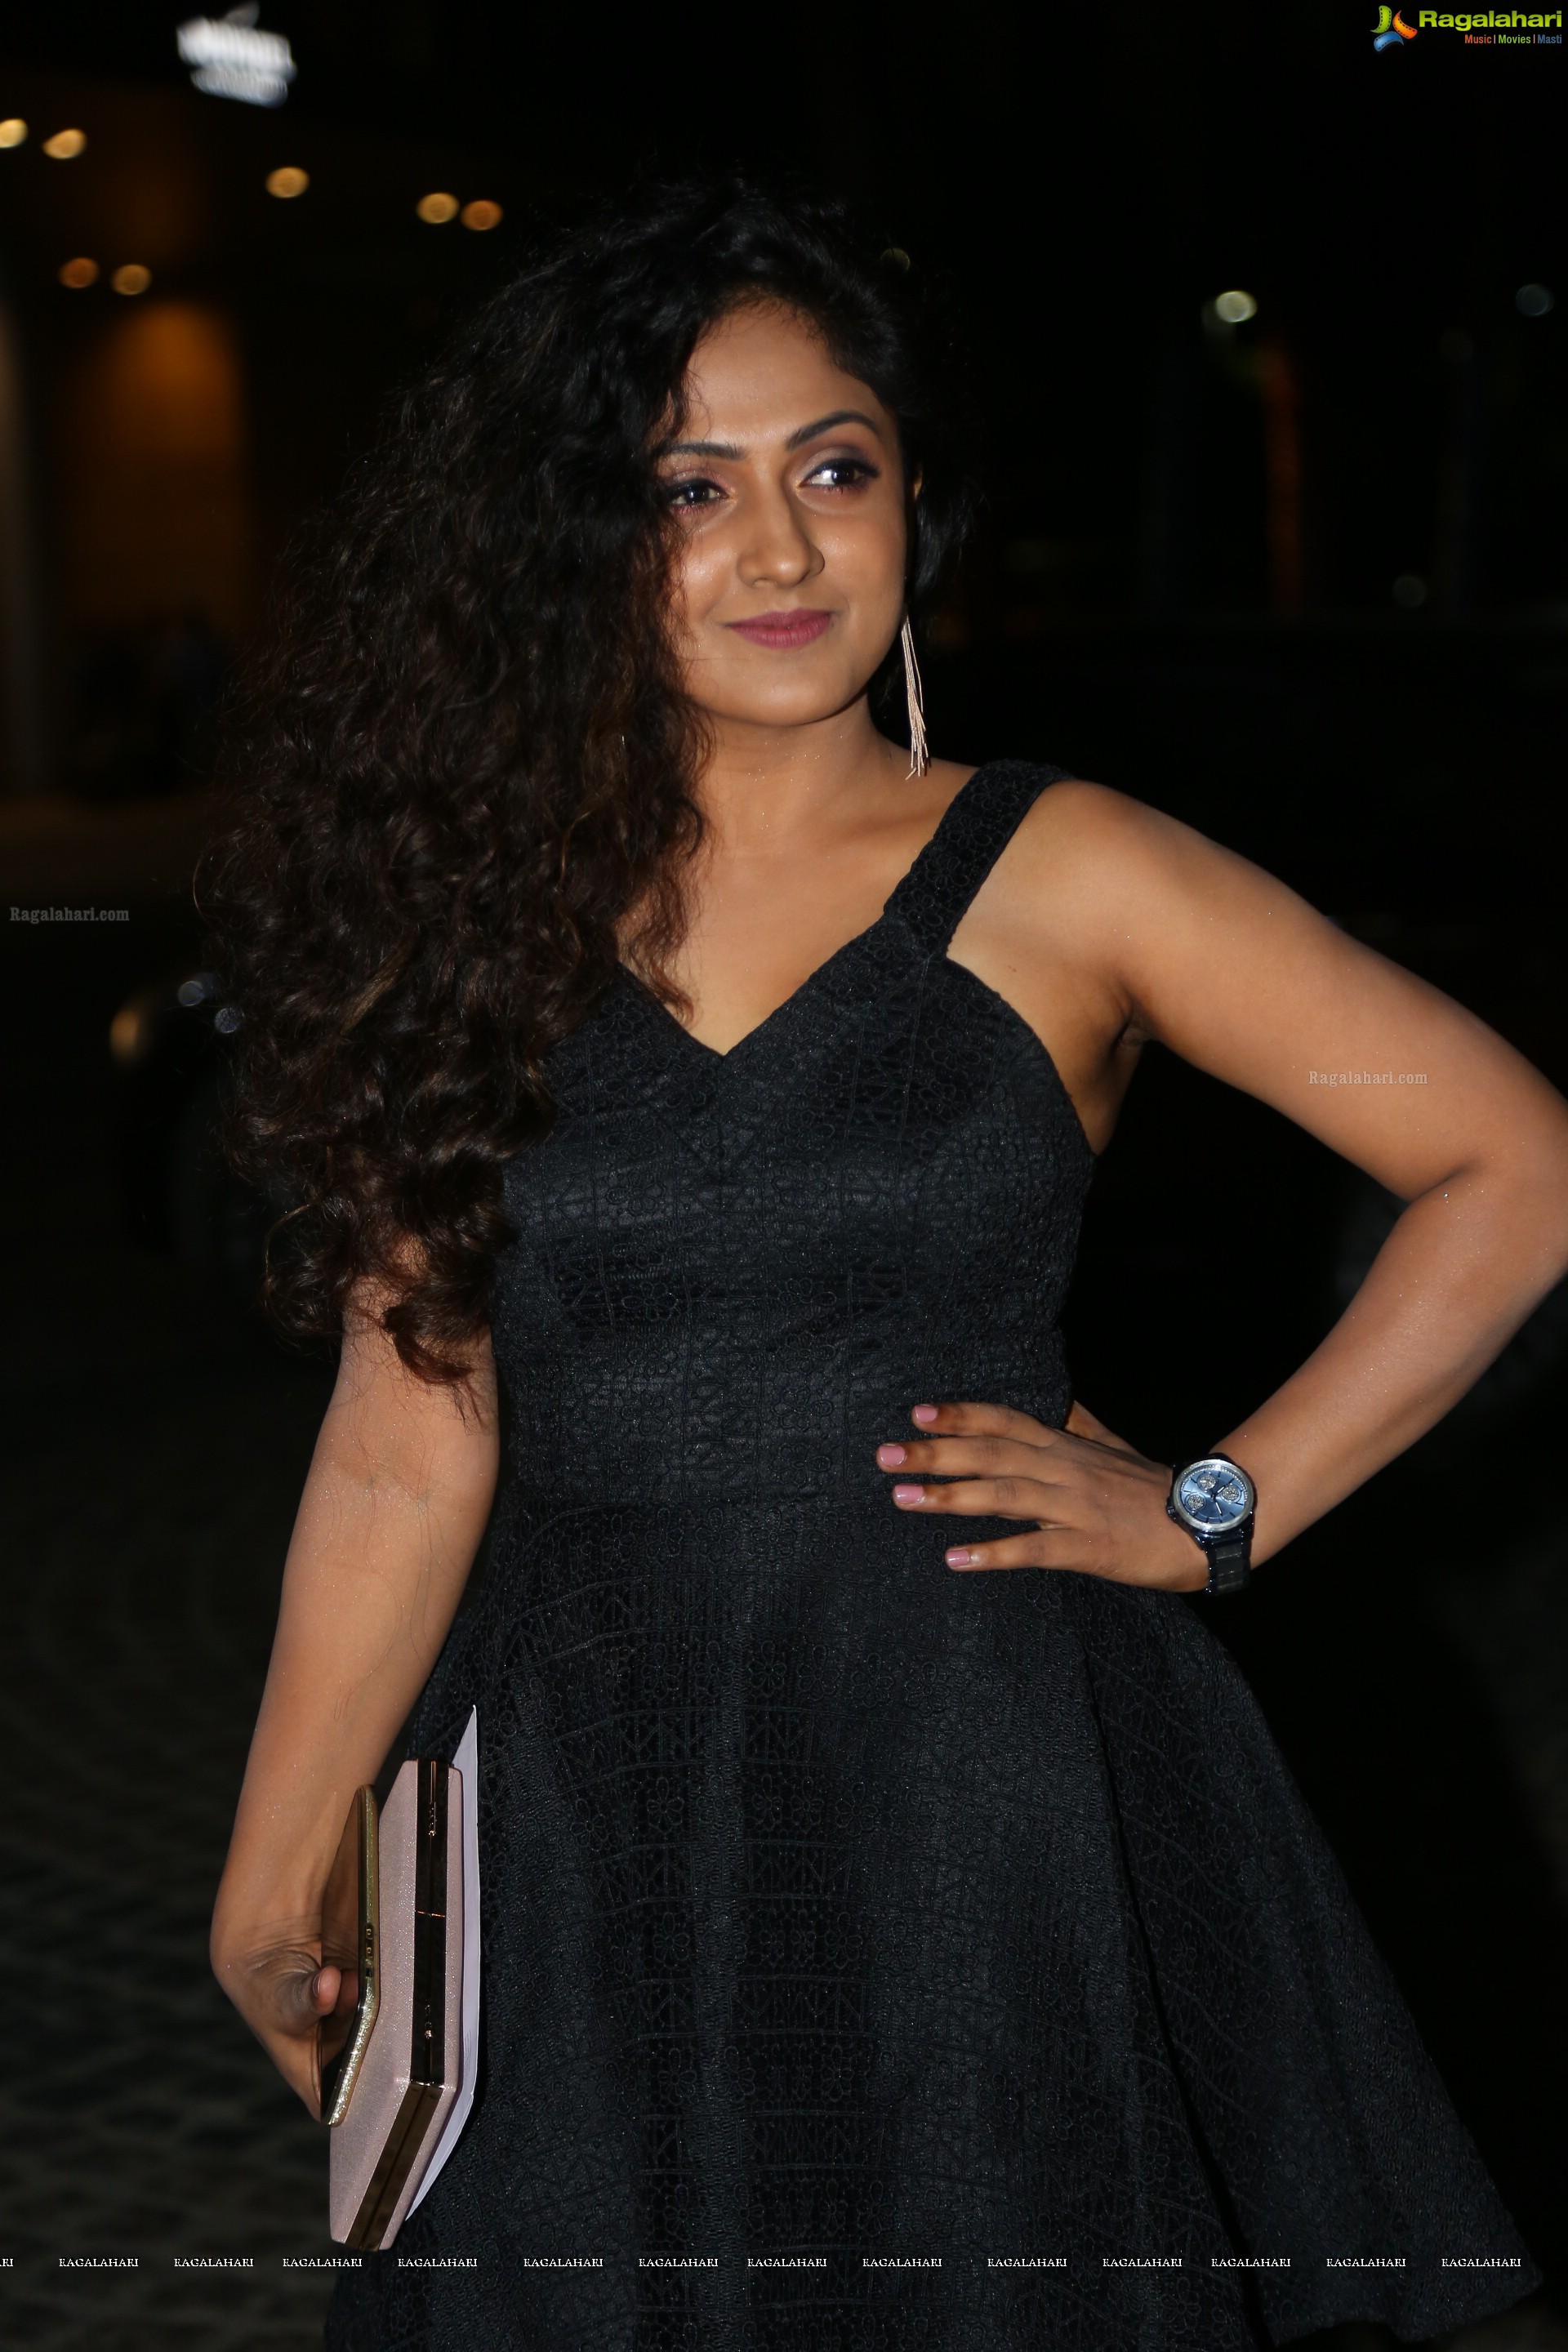 Sheela at Jio Filmfare Awards (South) 2018 (High Definition Photos)